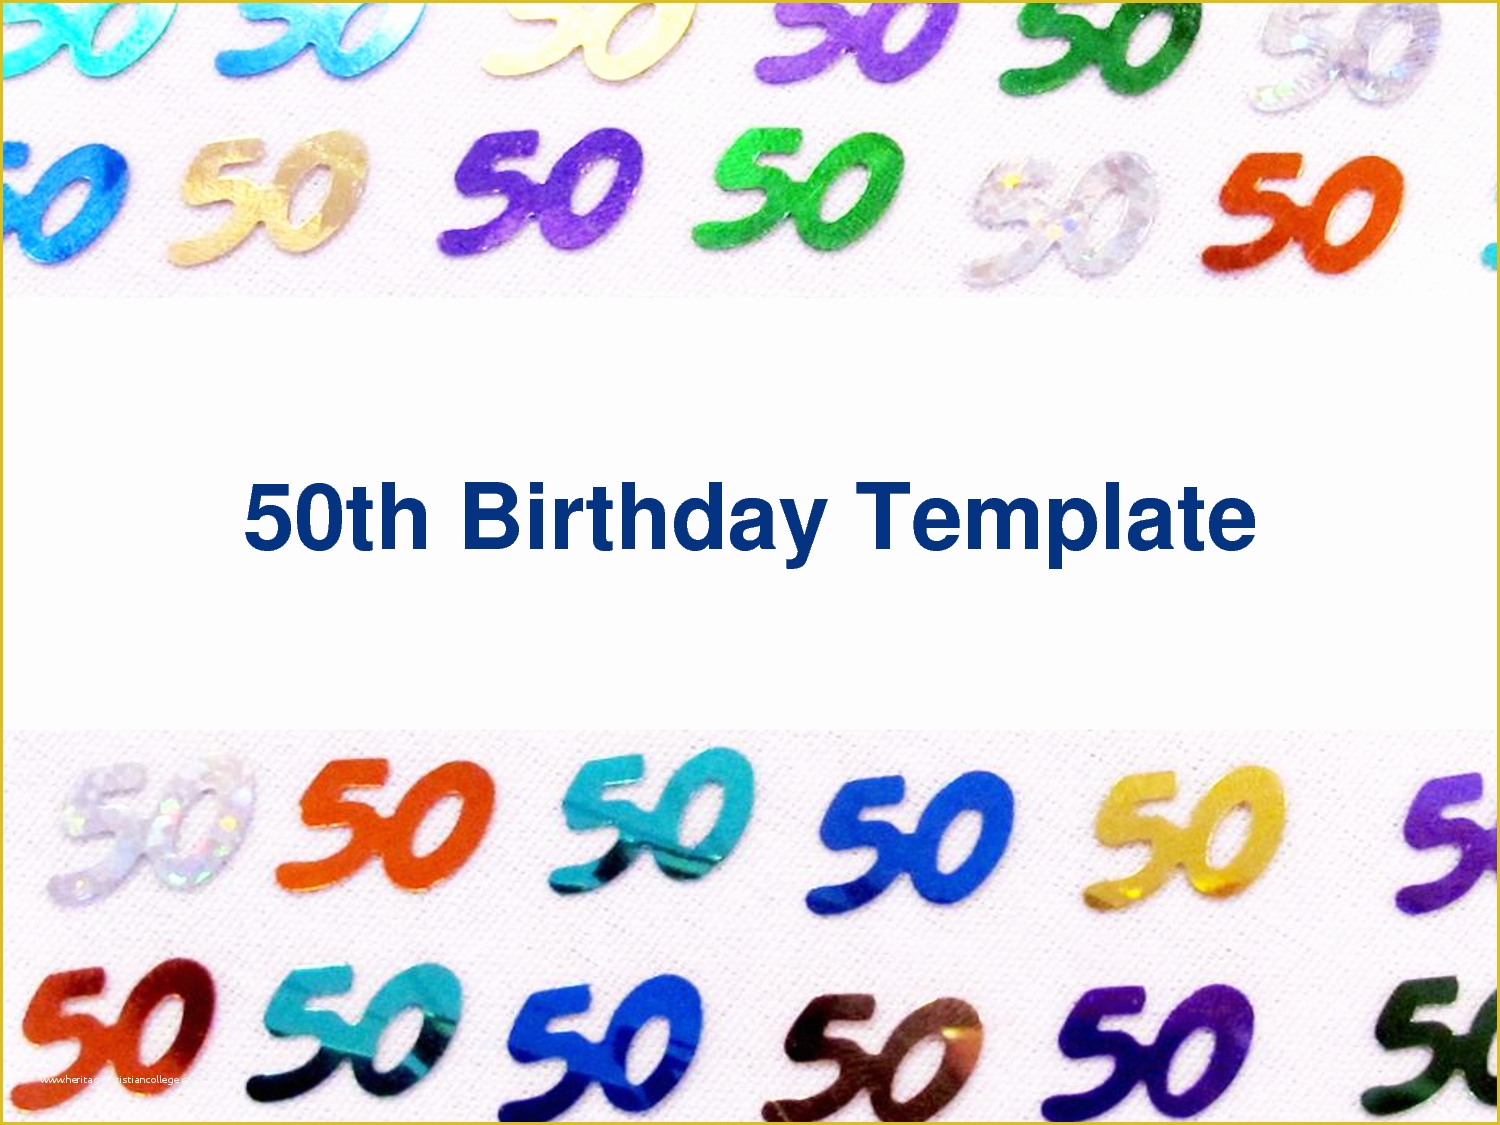 50th Birthday Invitation Templates Word Free Of Free 50th Birthday Party Invitation Templates